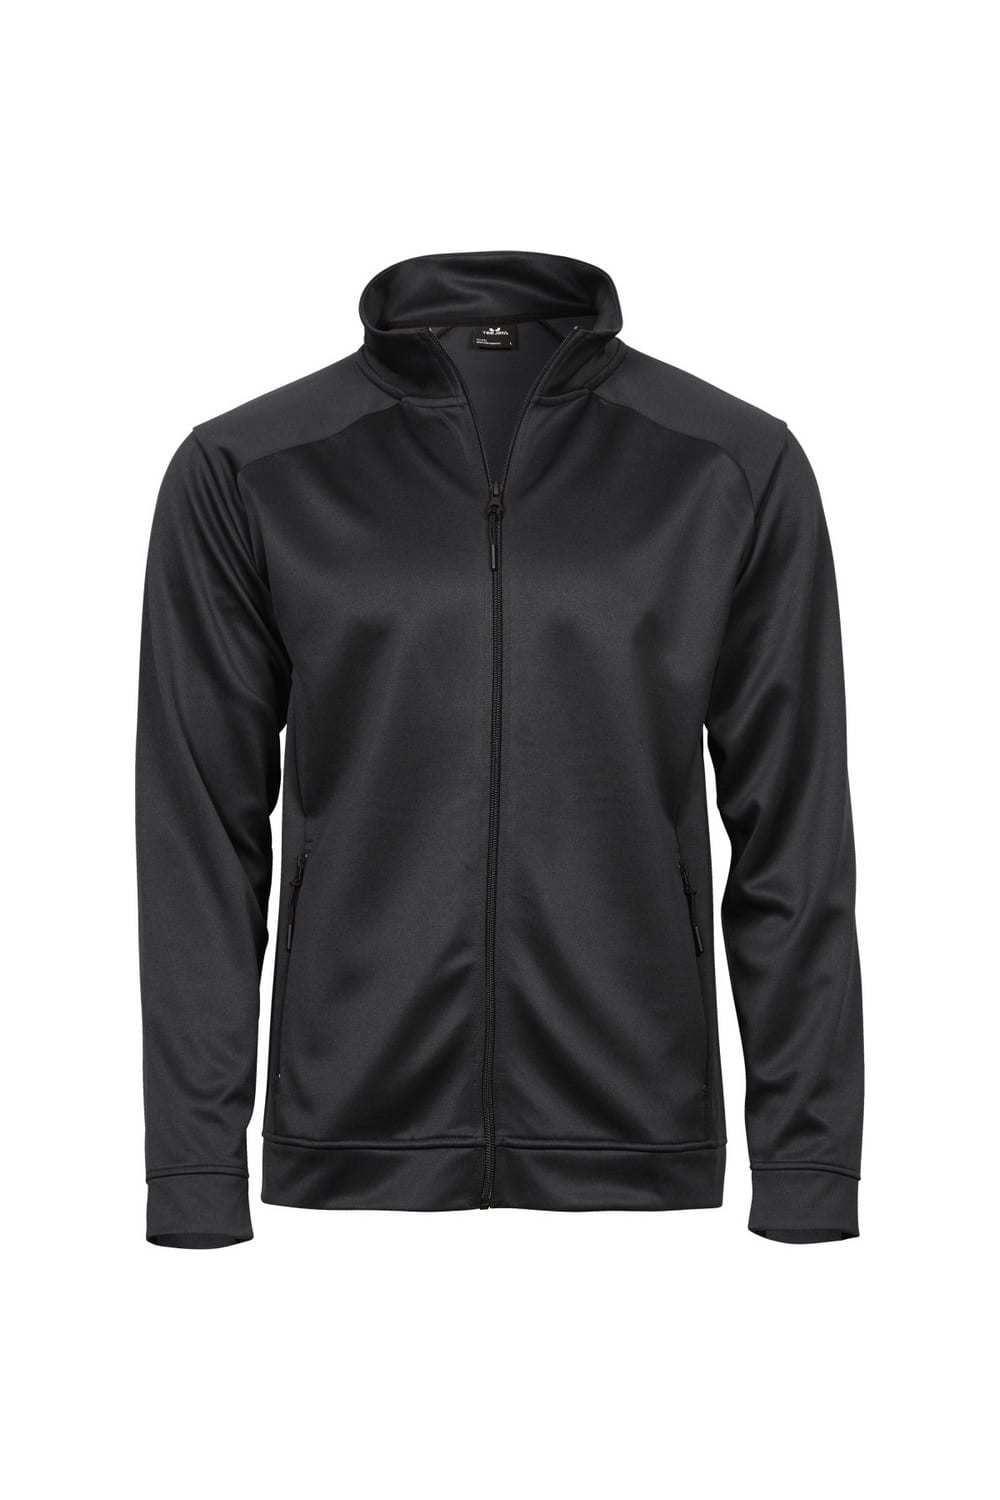 Tee Jays Mens Performance Zip Sweat Jacket (Black)